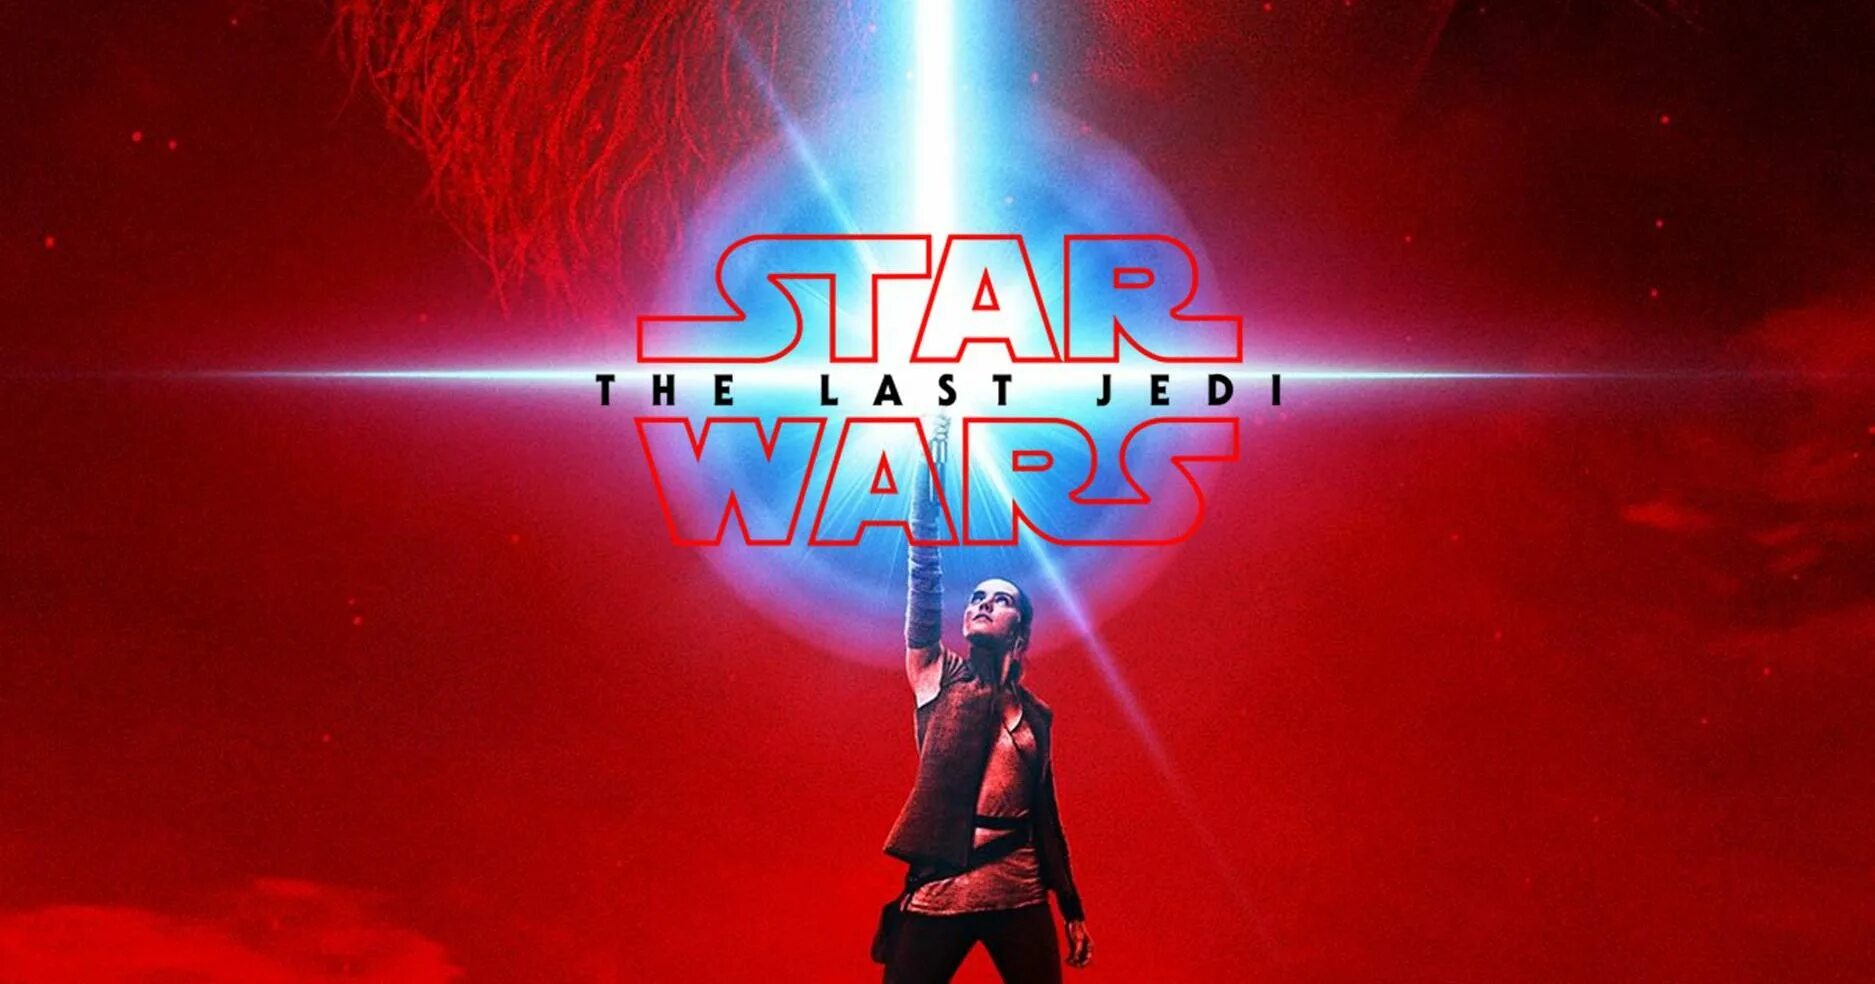 Star Wars - the last Jedi. Эпизод 8. Звёздные войны последние джедаи Постер. Звездные войны 8 Постер.